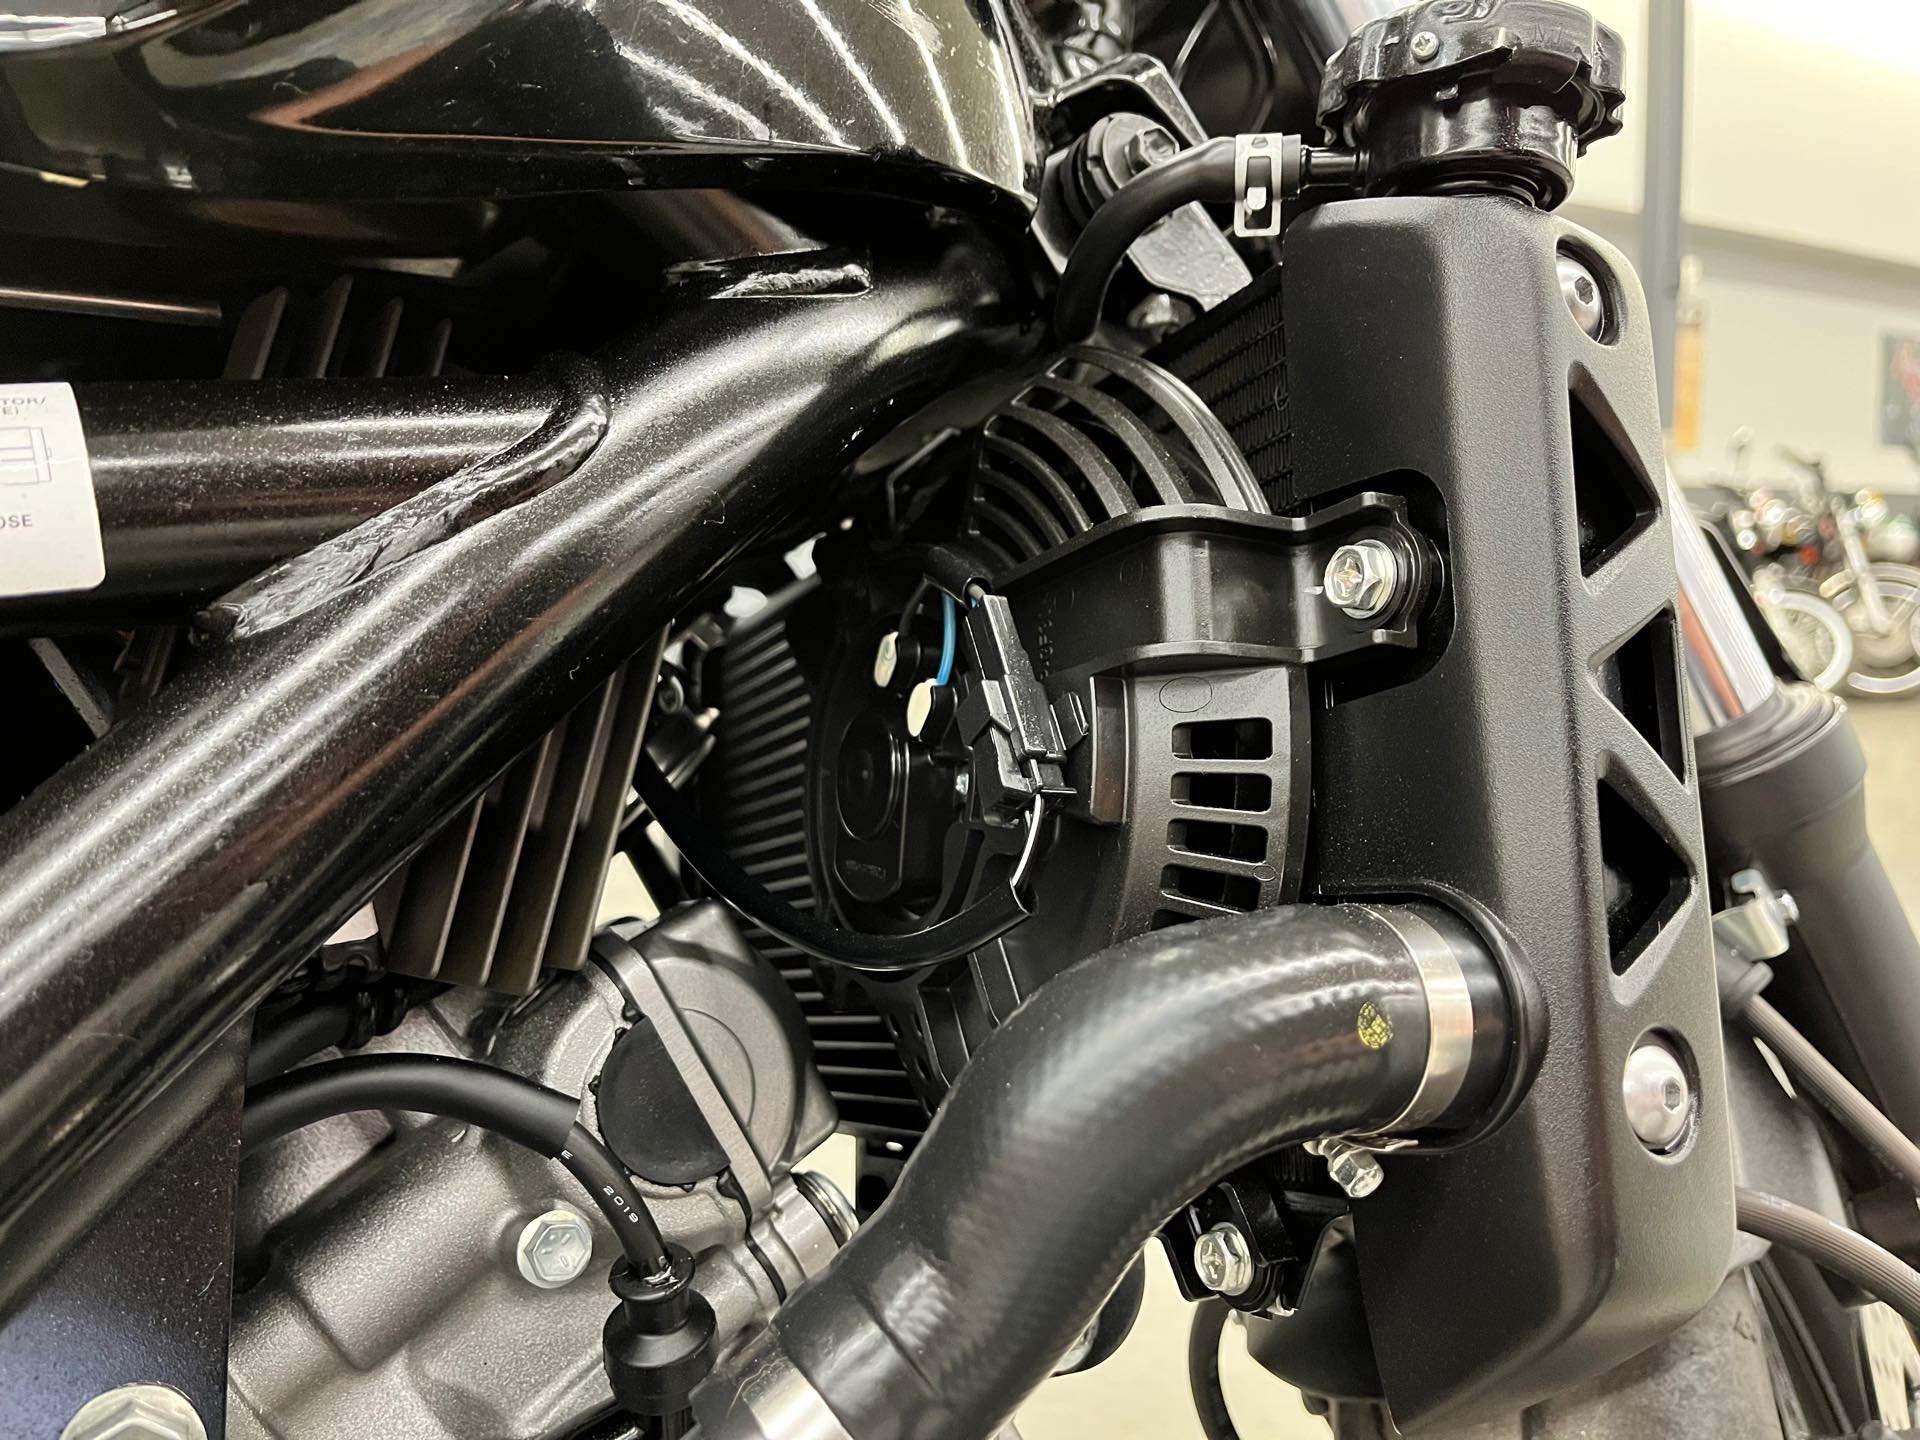 2020 Suzuki SV 650X at Aces Motorcycles - Denver